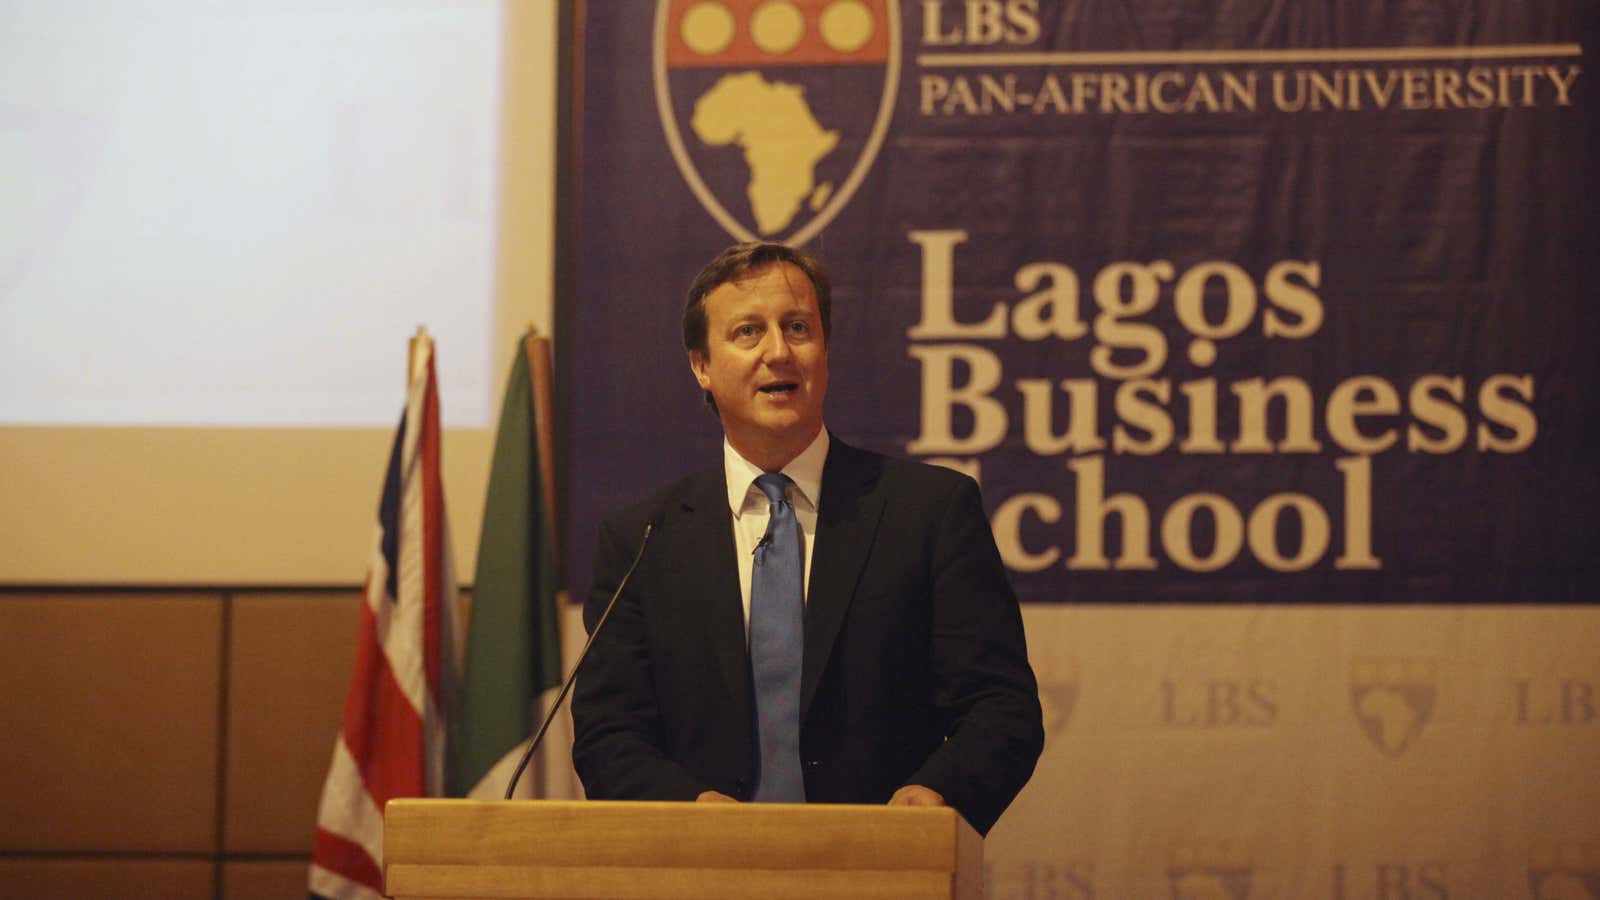 British PM Cameron speaking at Lagos Business School in 2011